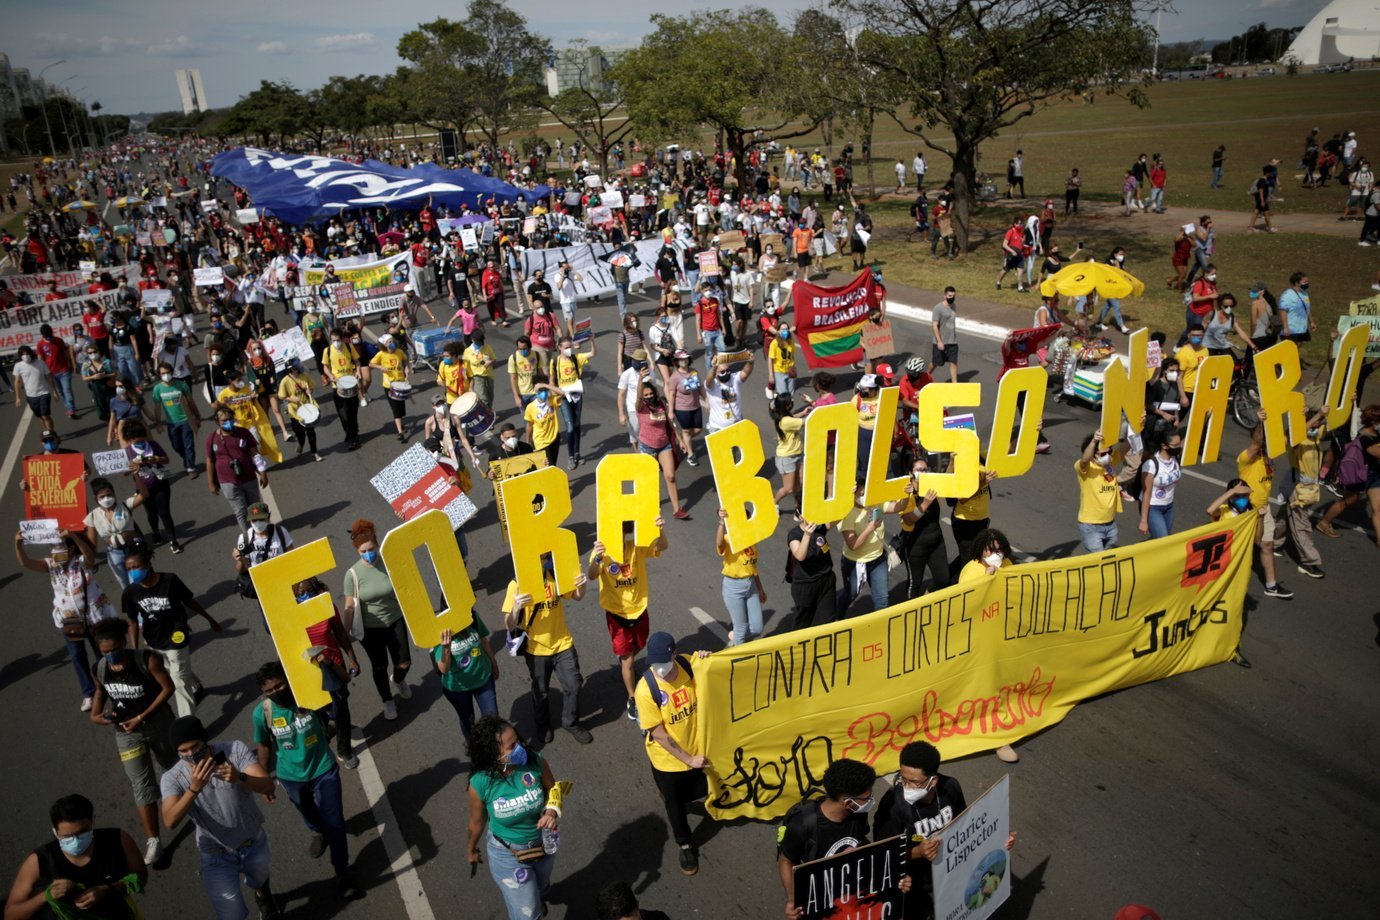 Imprensa internacional destaca protestos contra Bolsonaro no Brasil